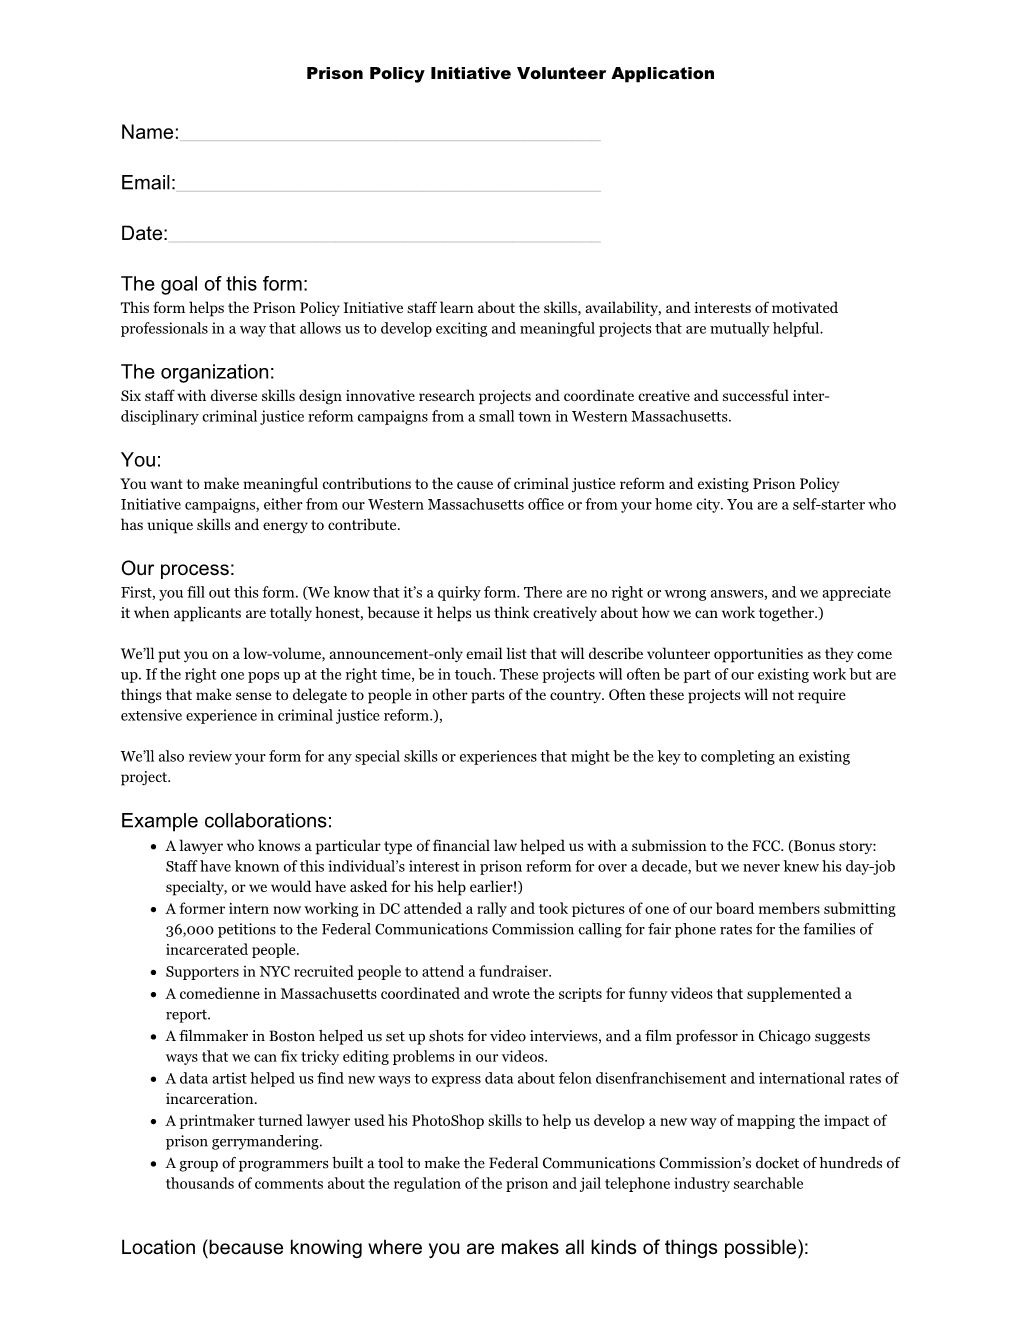 Prison Policy Initiative Volunteer Application